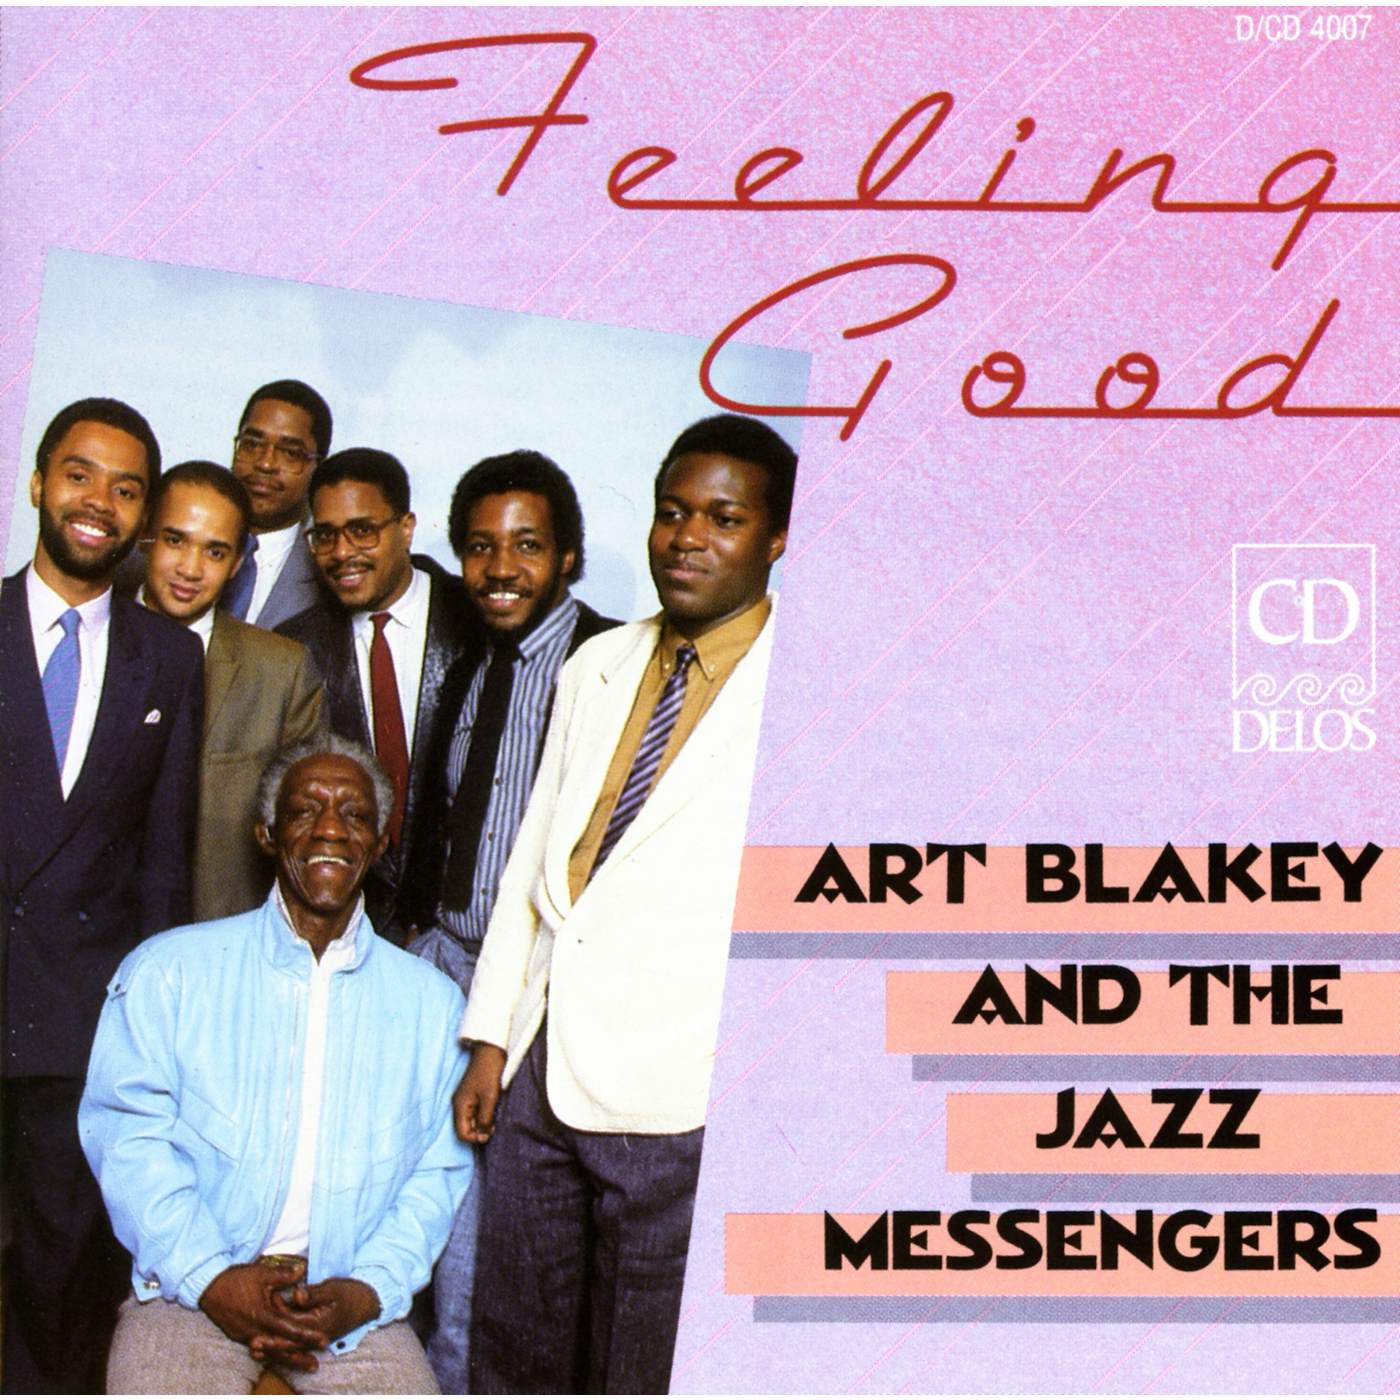 Art Blakey & The Jazz Messengers CD